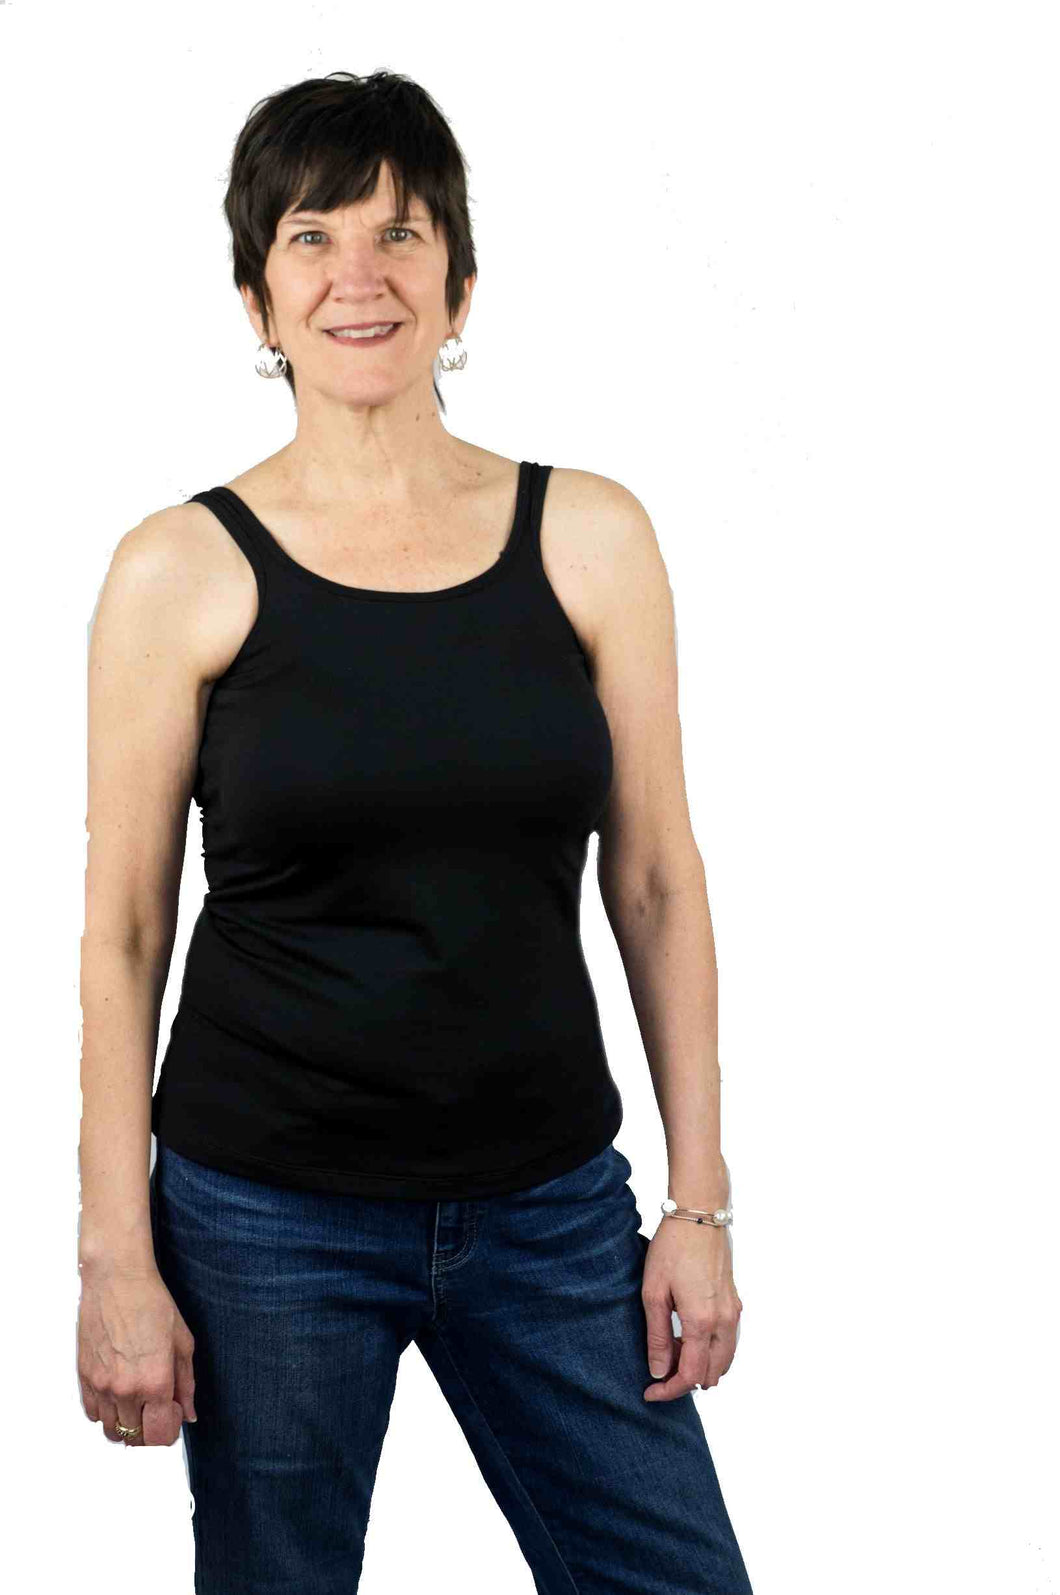 Post mastectomy clothing without bra band with prosthesis in black small medium large xlarge